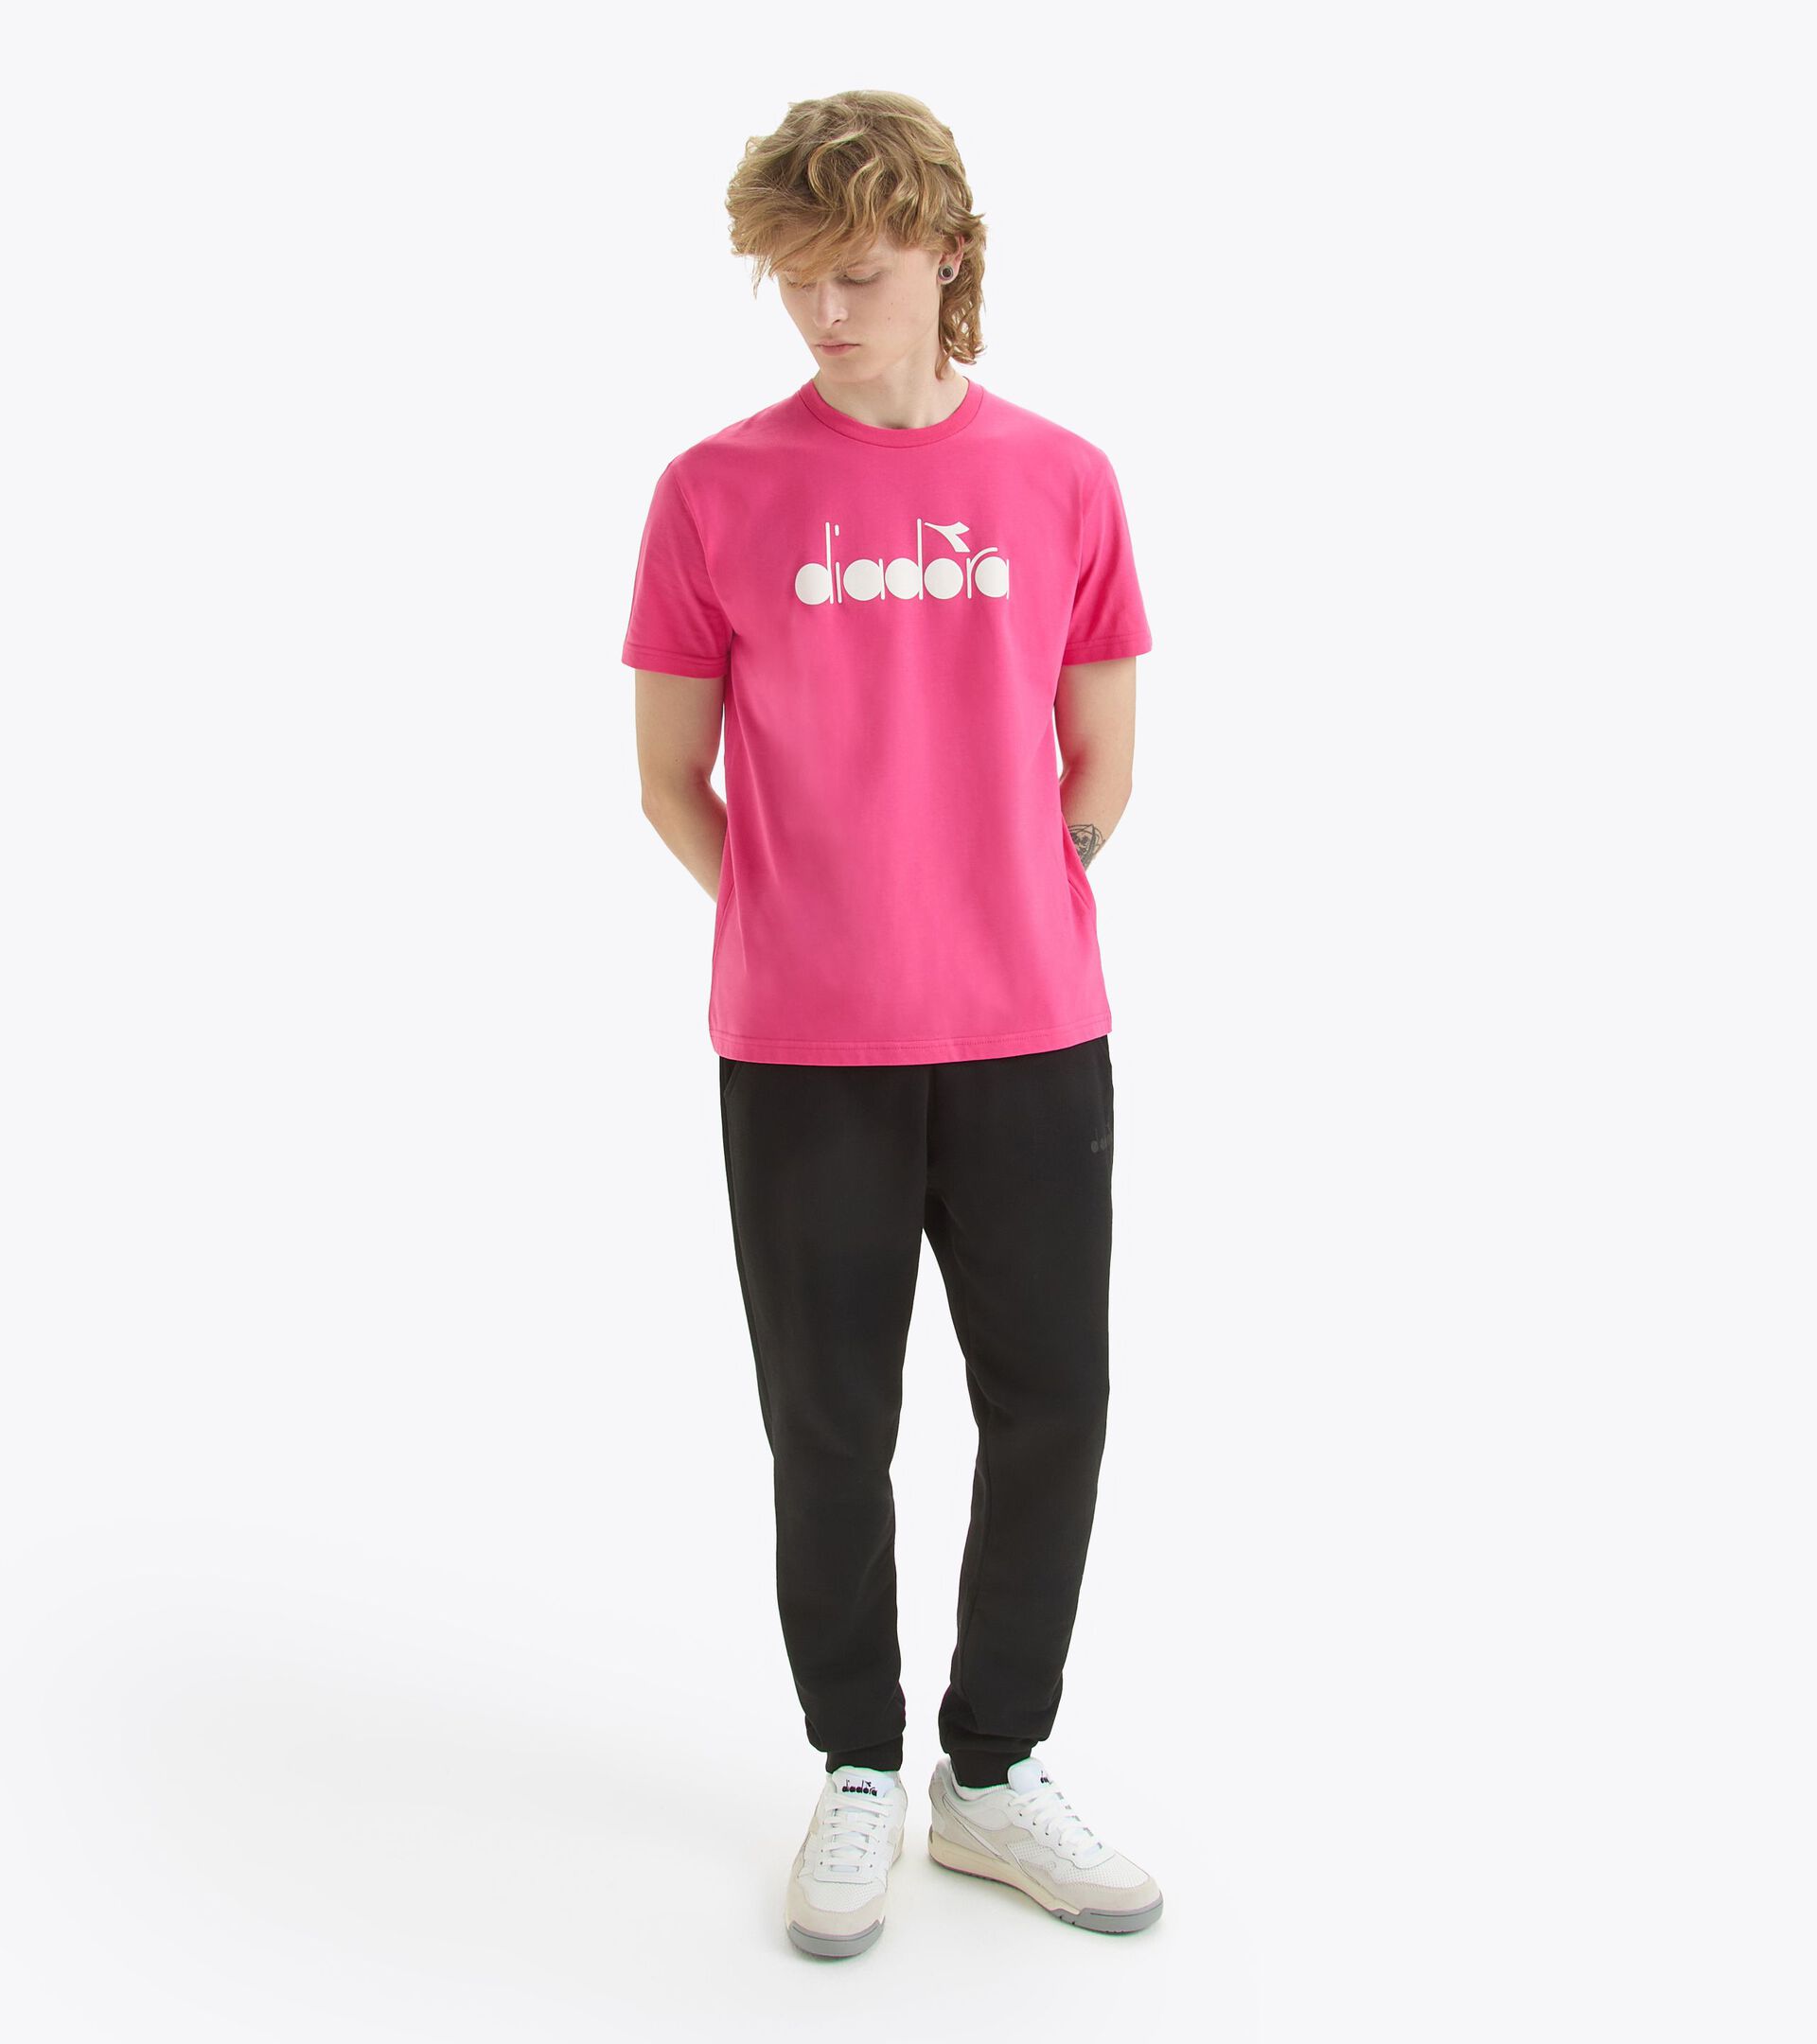 Camiseta - Made in Italy - Gender neutral  T-SHIRT SS LOGO FRAMBUESA SORBETE - Diadora